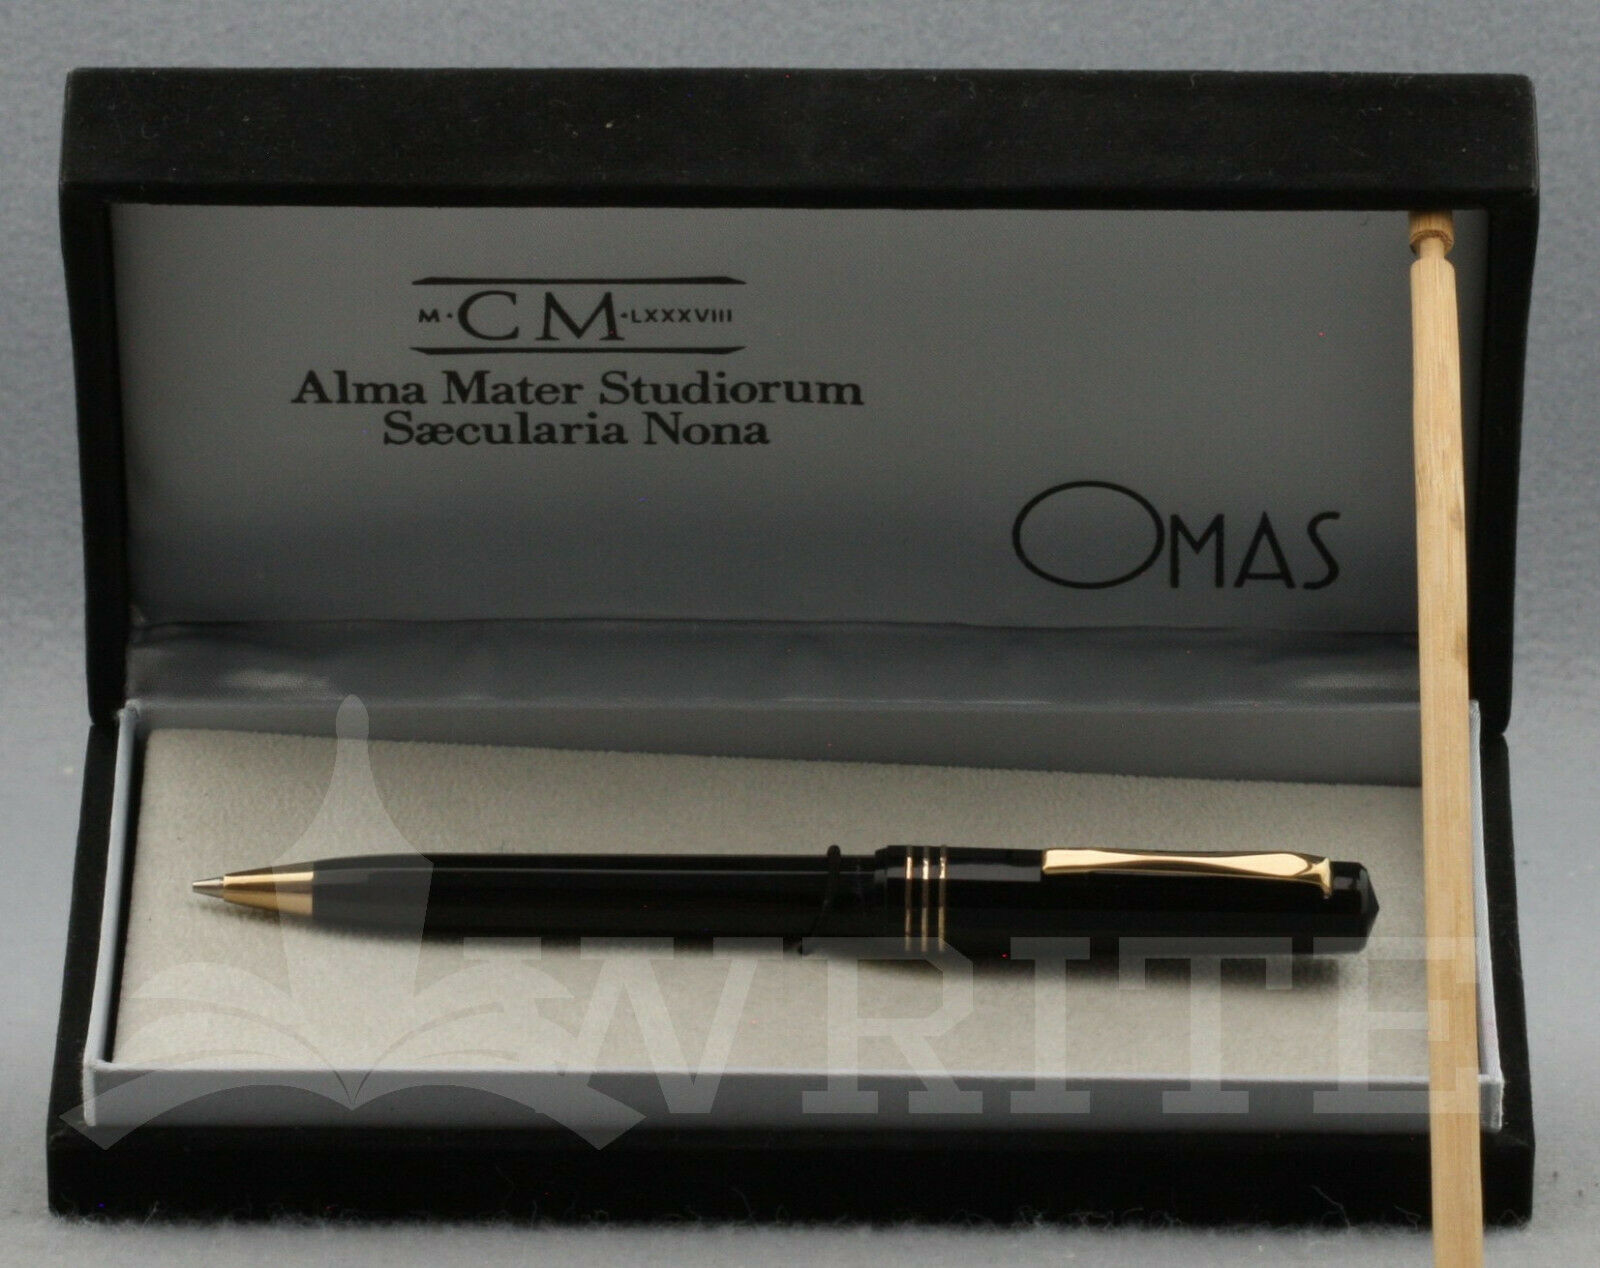 New! Mechanical Pencil Omas Alma Mater Studiorum Saecularia Nona